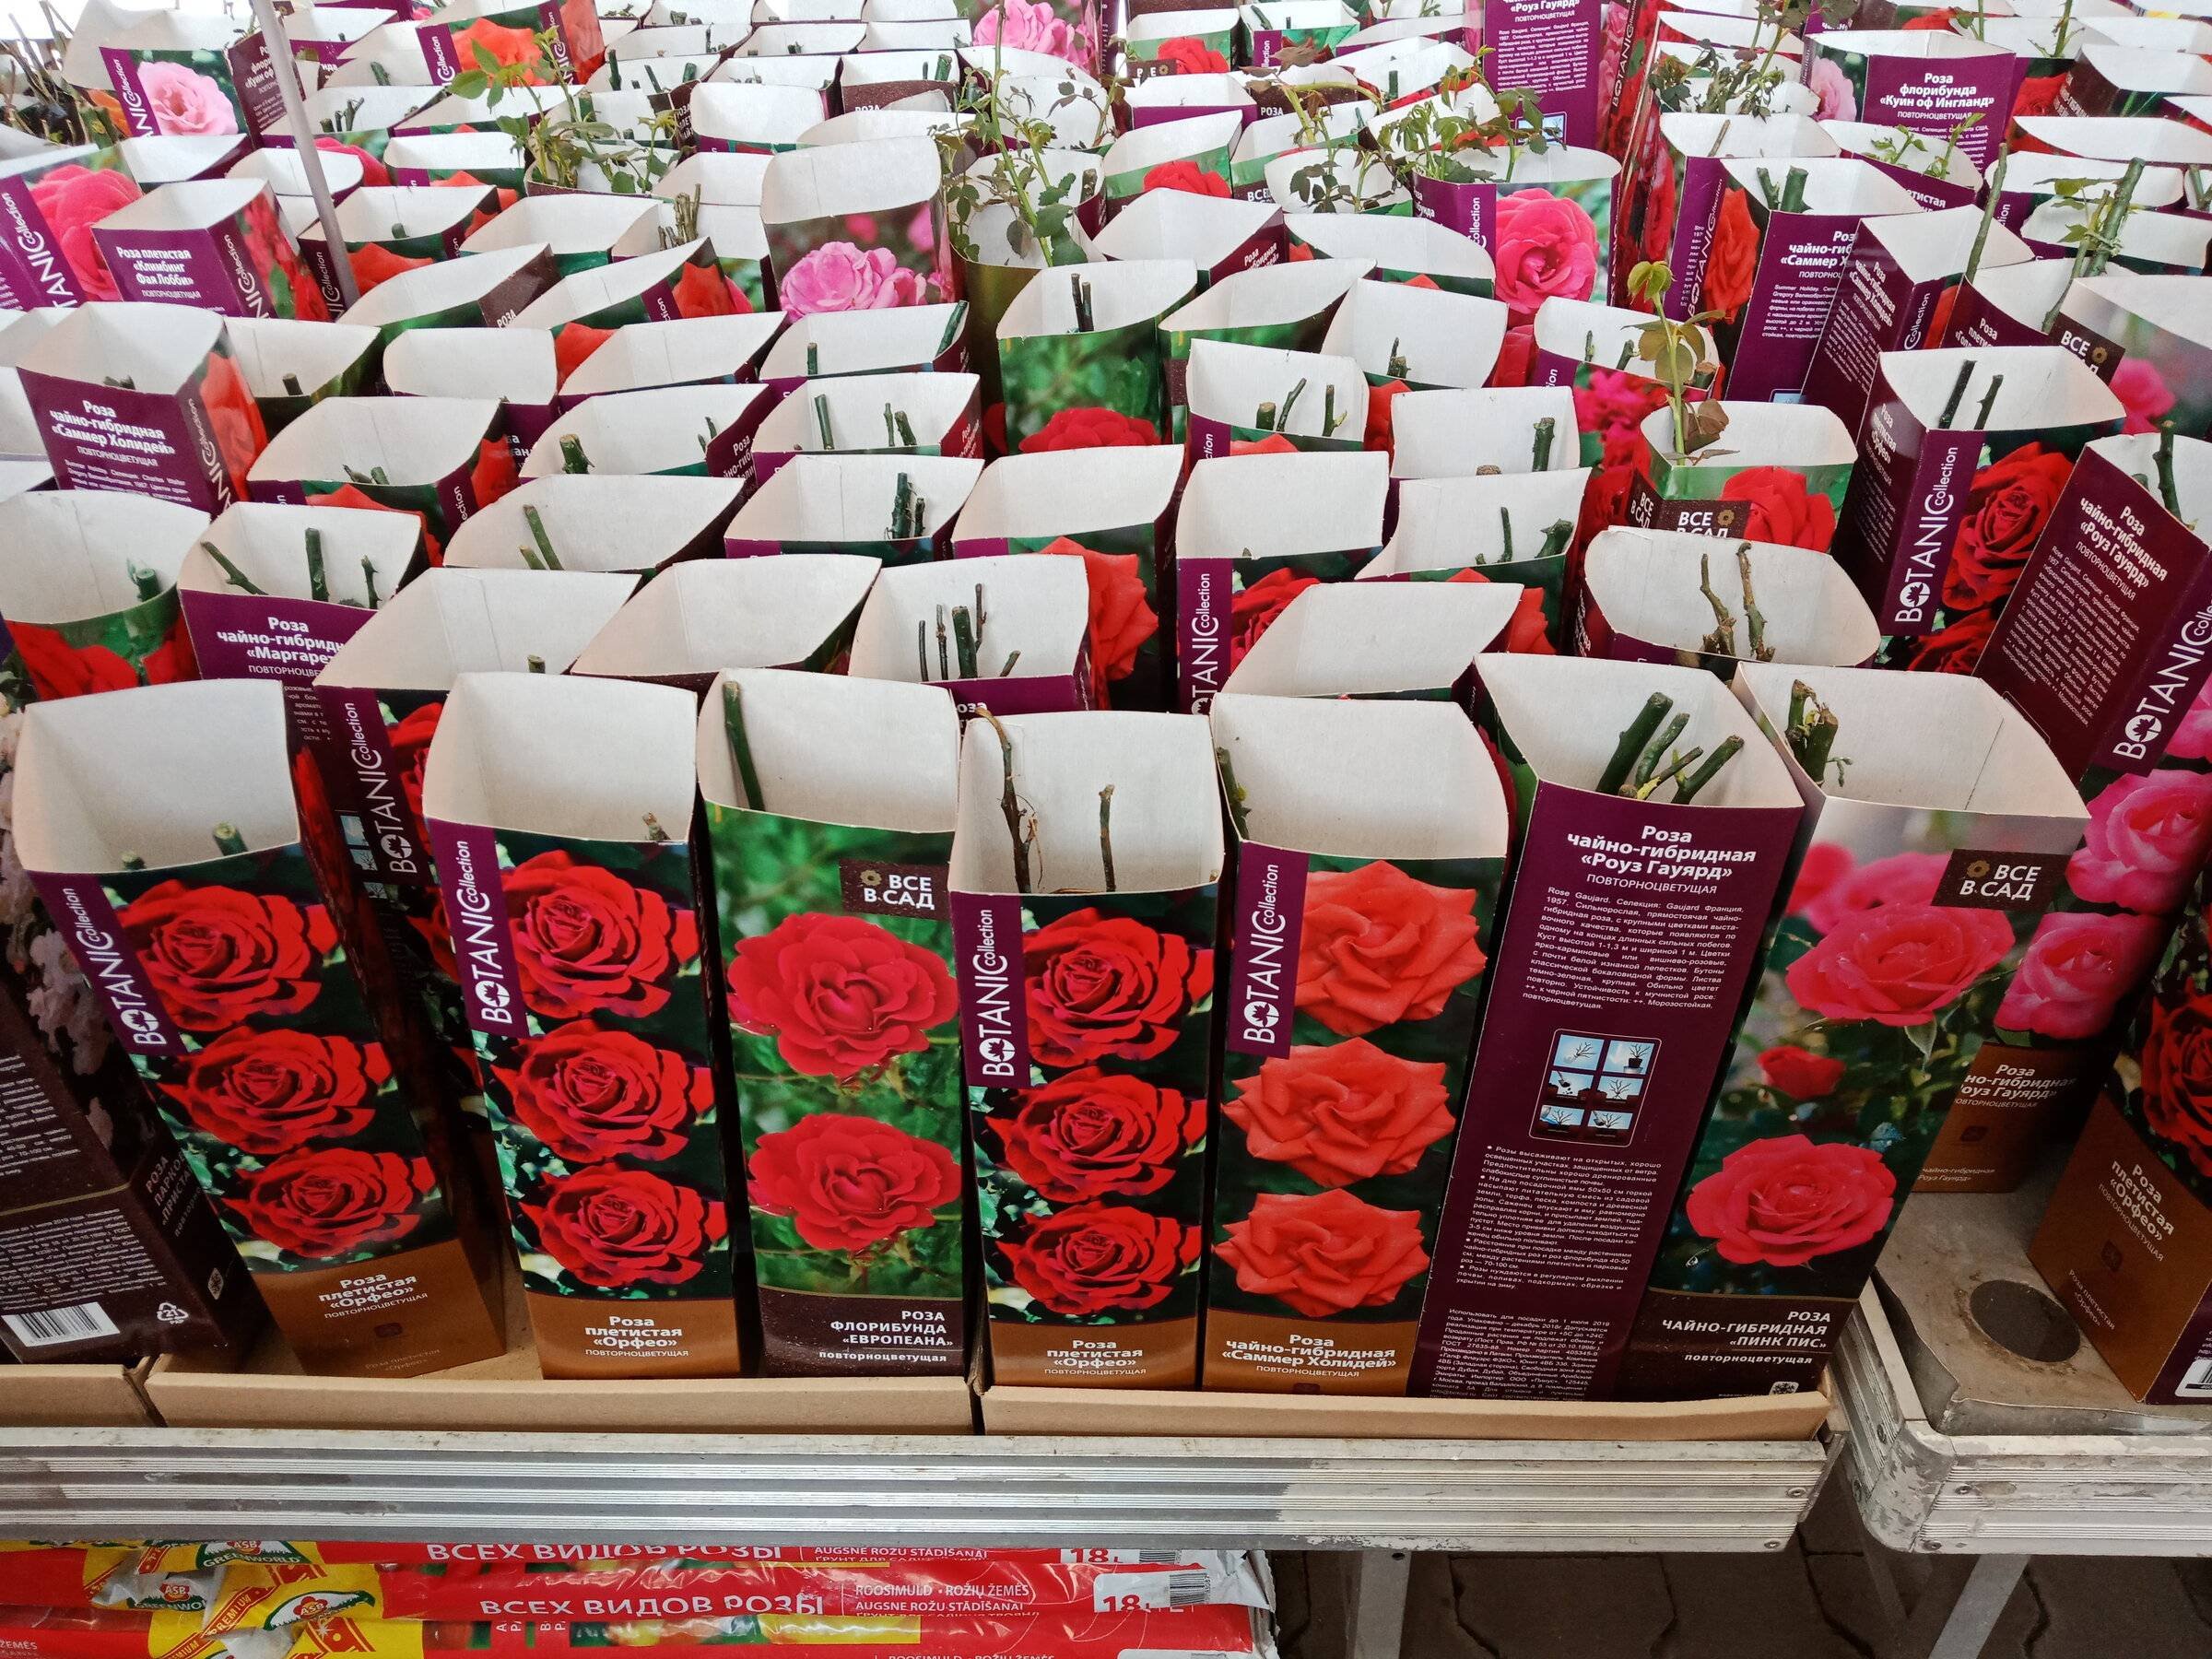 Садовые розы саженцы. Саженцы роз в коробках. Рассада роз. Саженцы роз в Ашане. Сажгняы роз в коробочках в магазине.